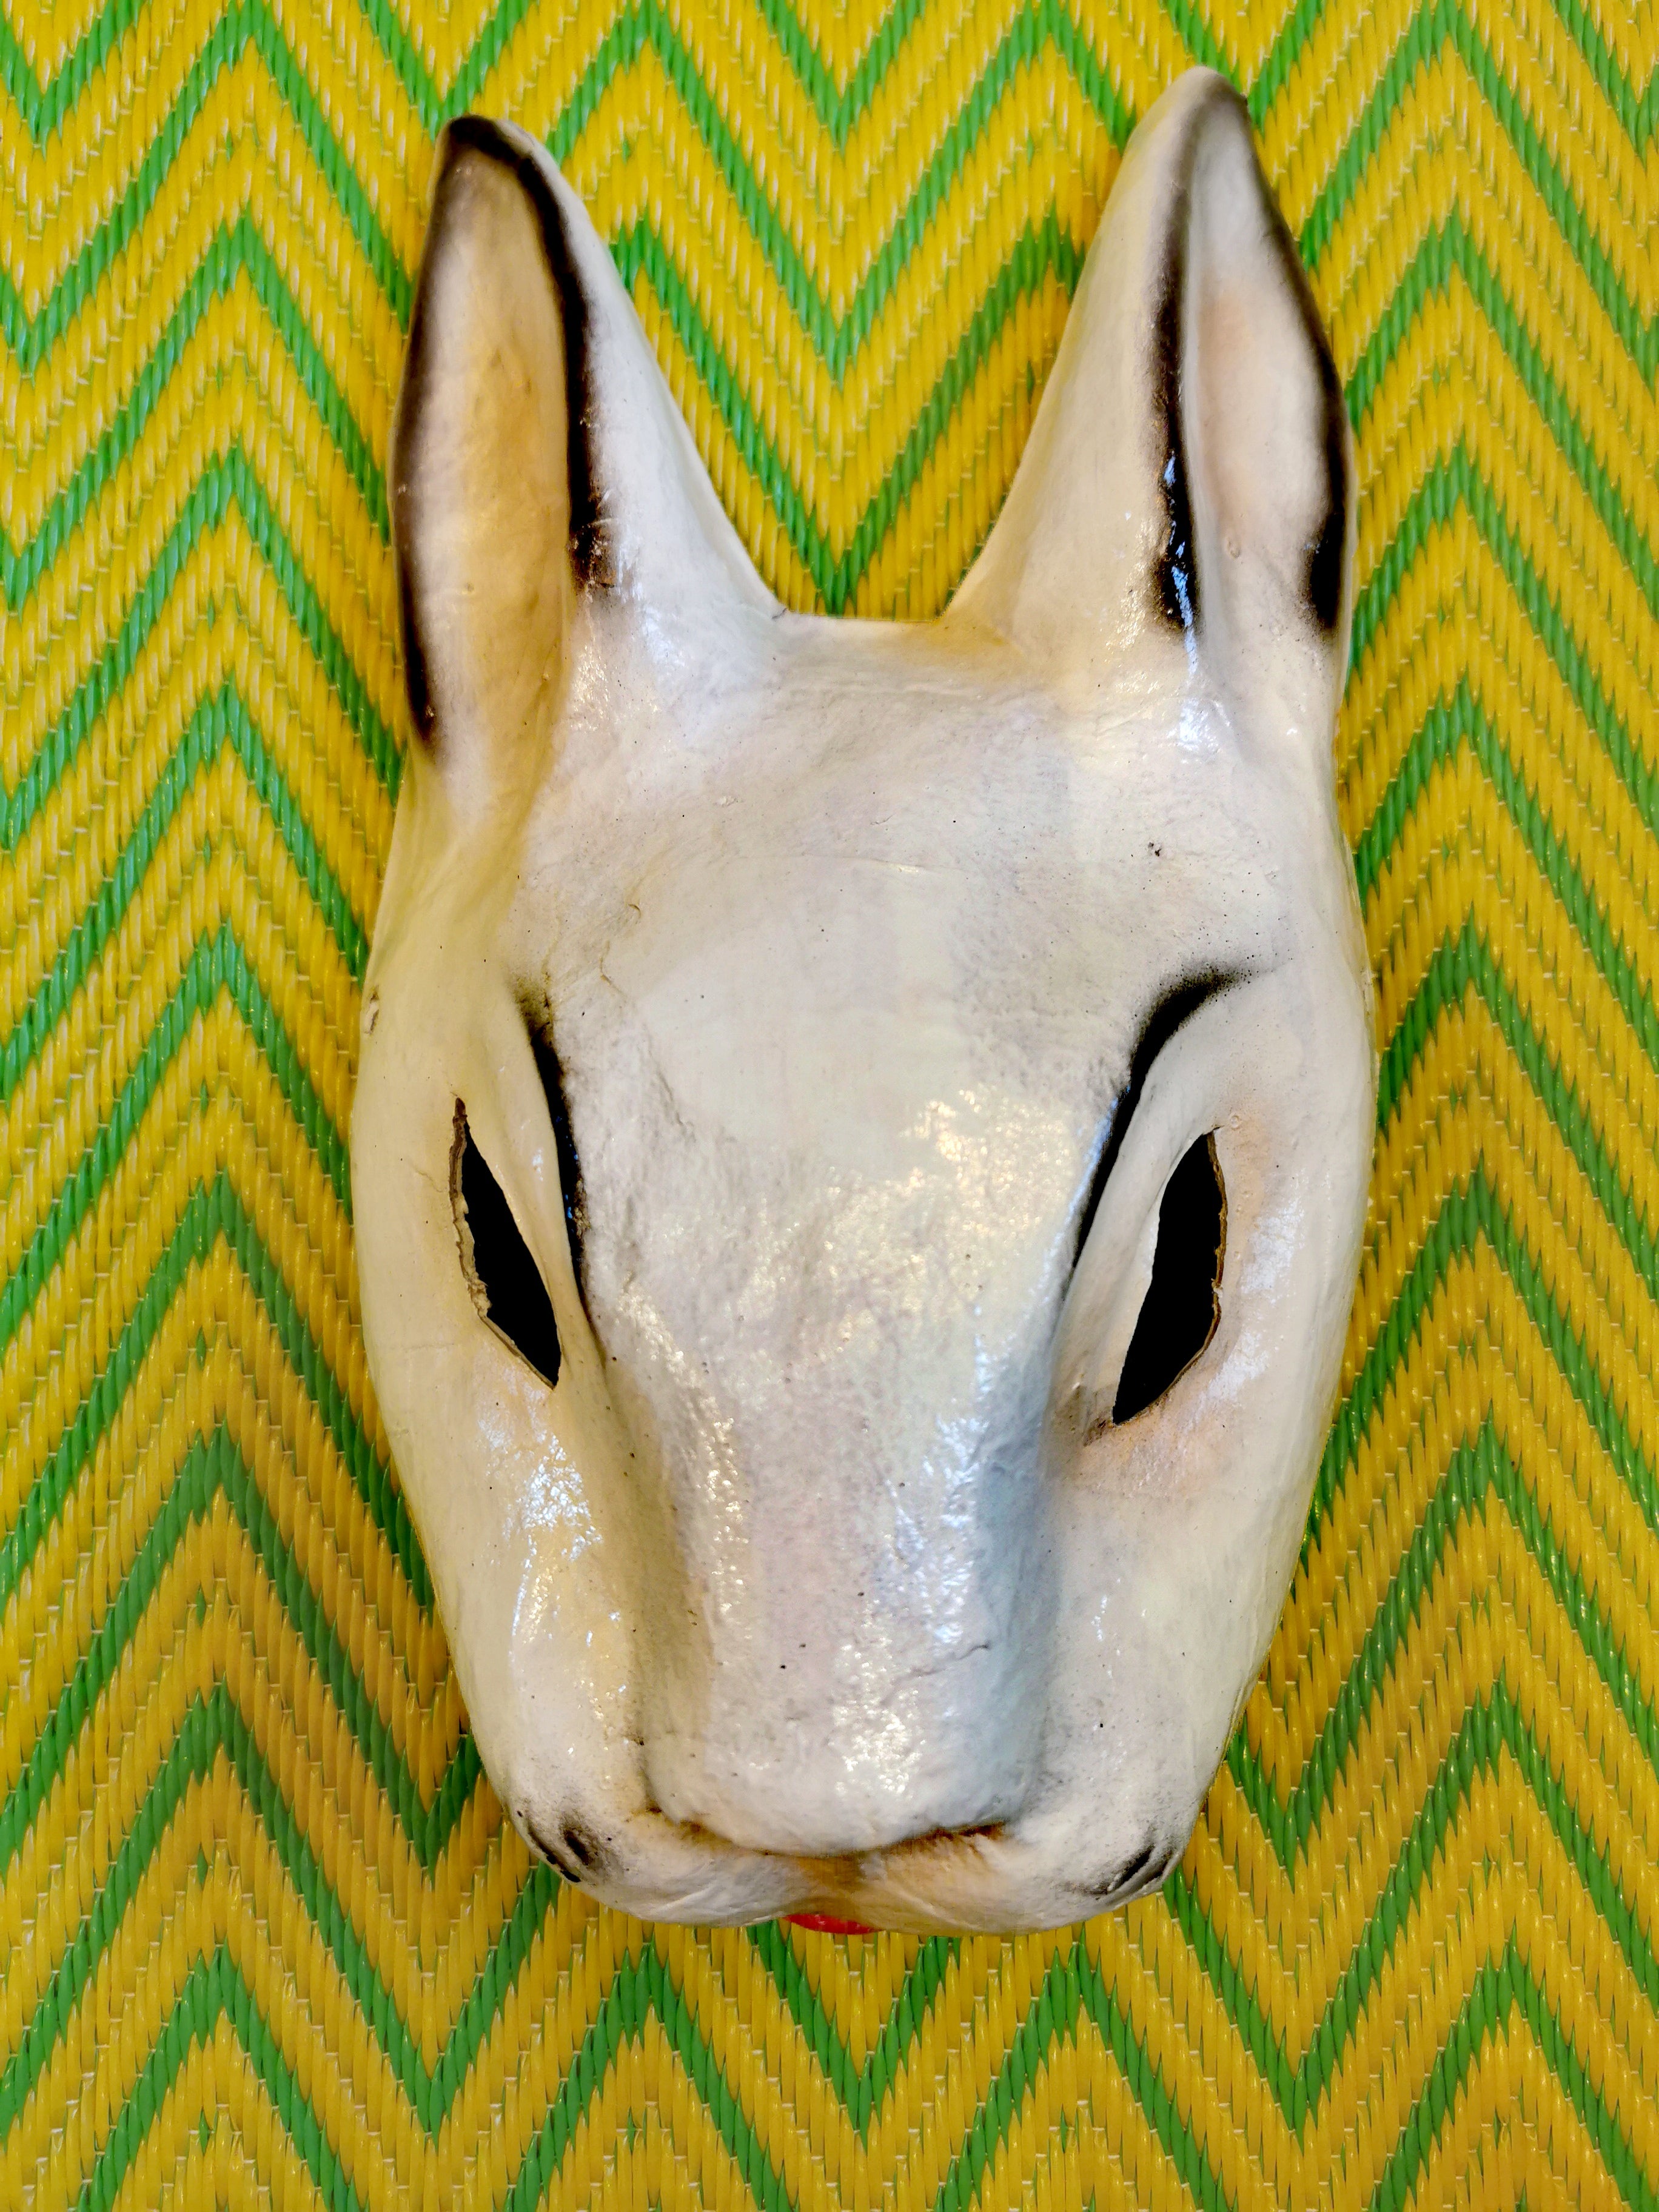 Mexican paper mache masks